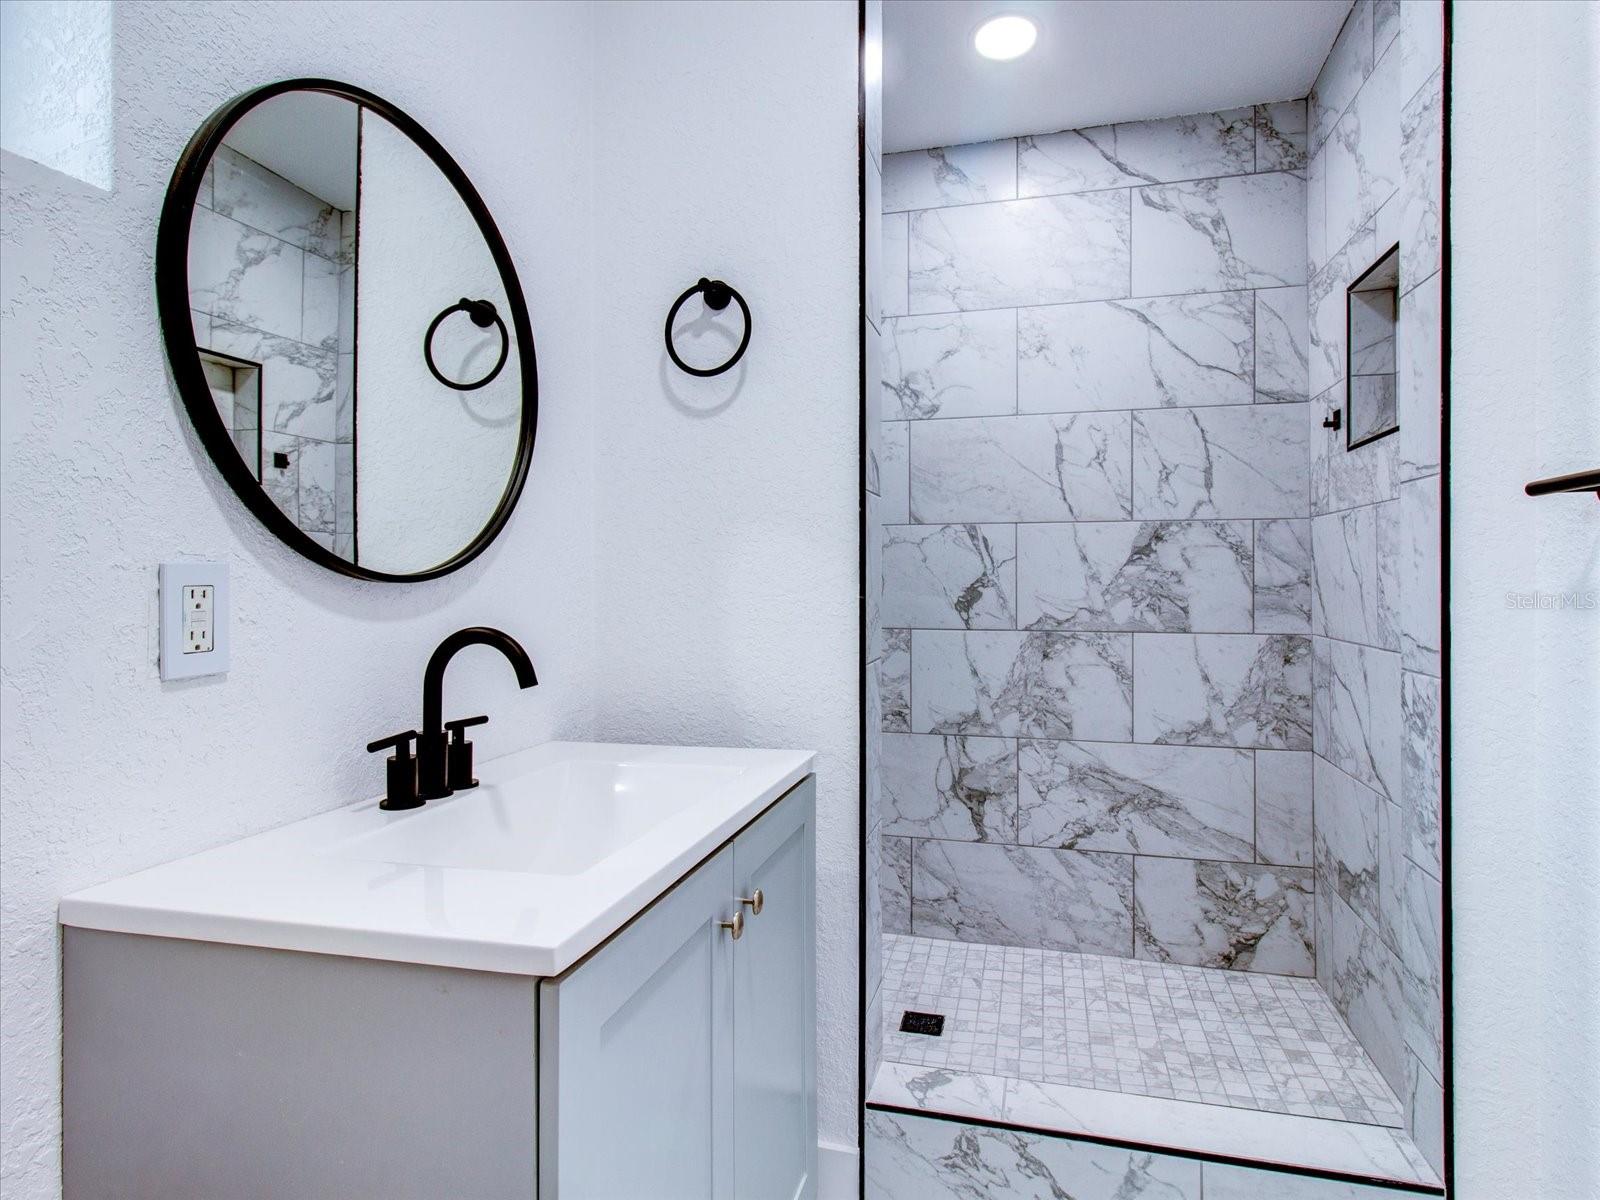 Bathroom 2 Vanity and Tiled Shower